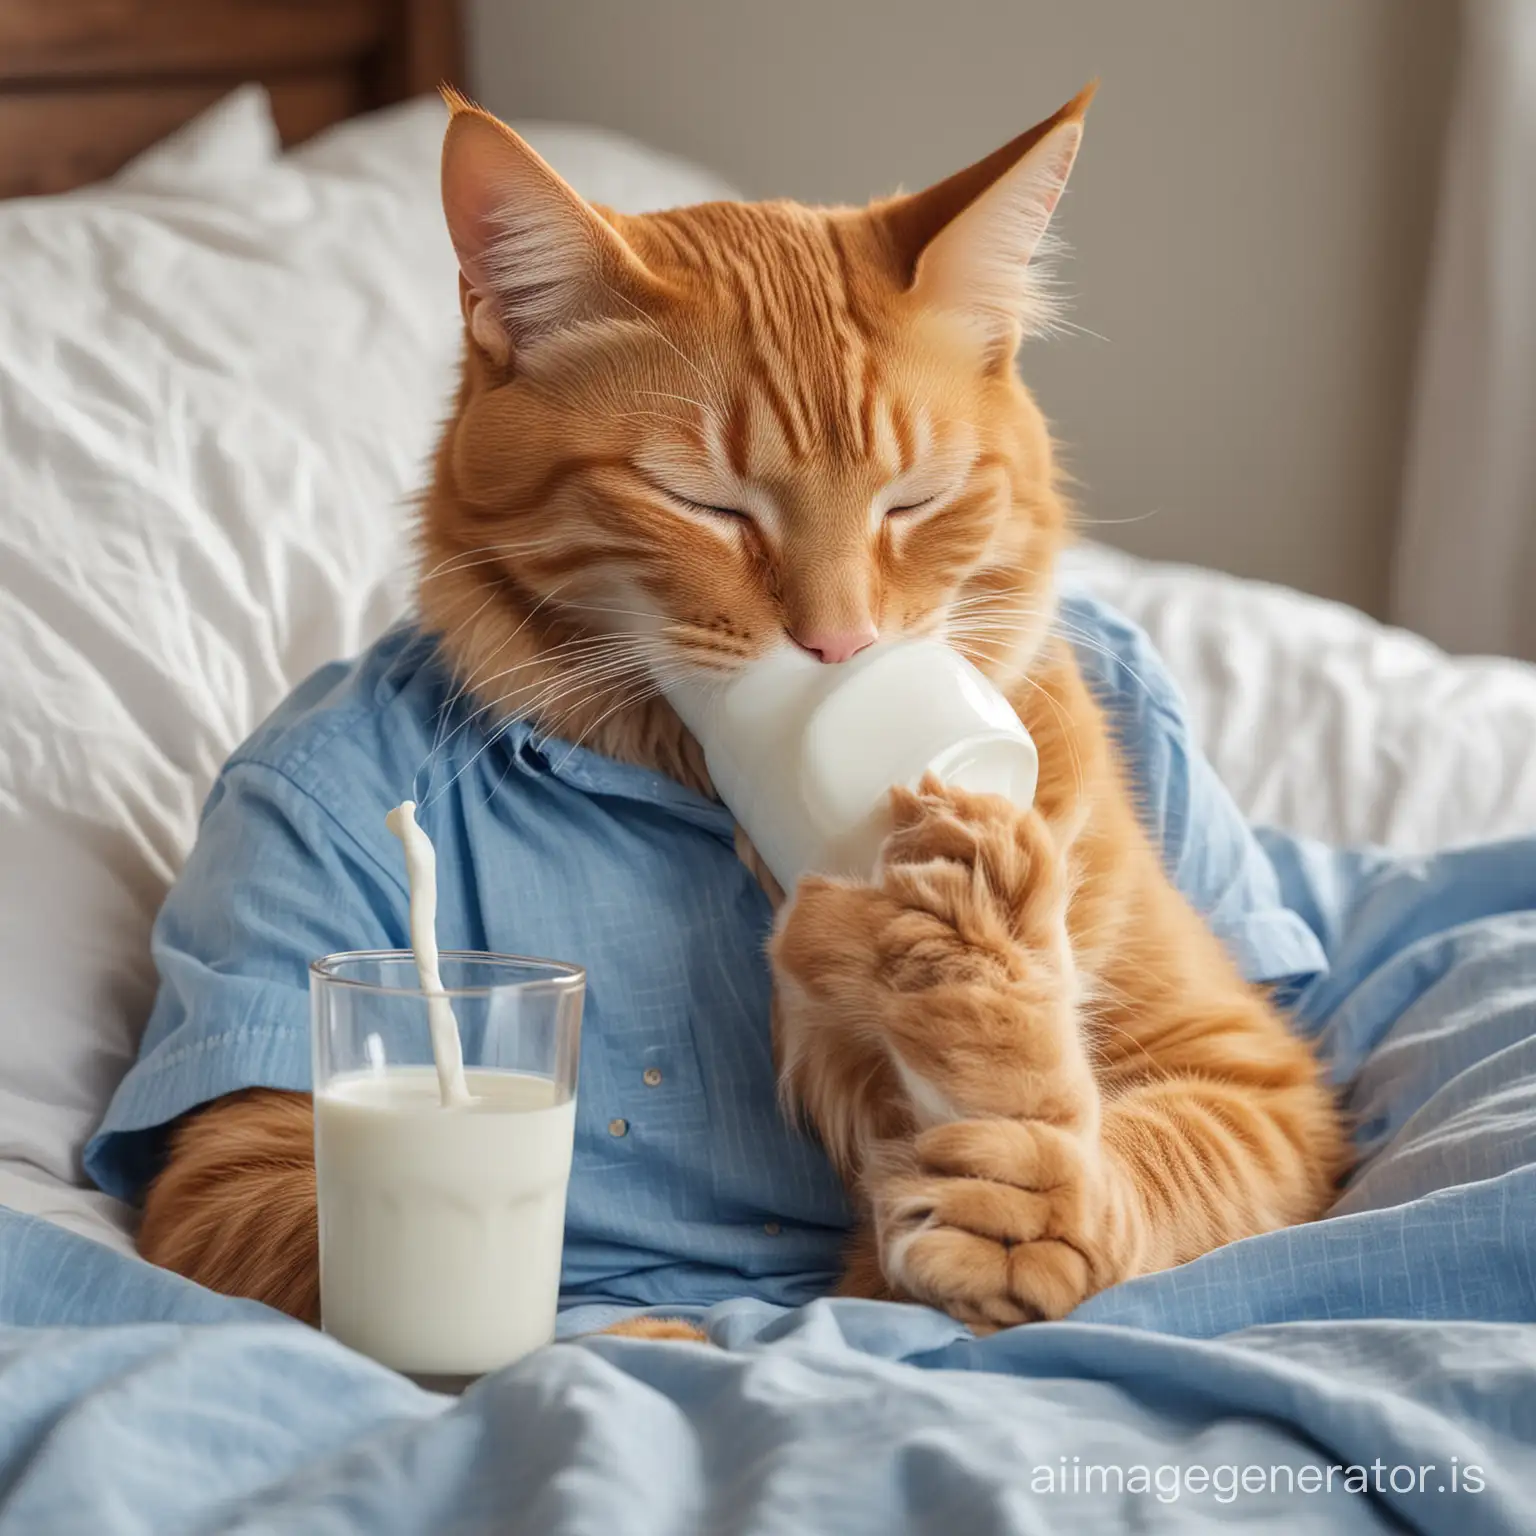 Buatkan gambar kucing orange pakai baju biru lagi minum susu sambil tidur di kasur